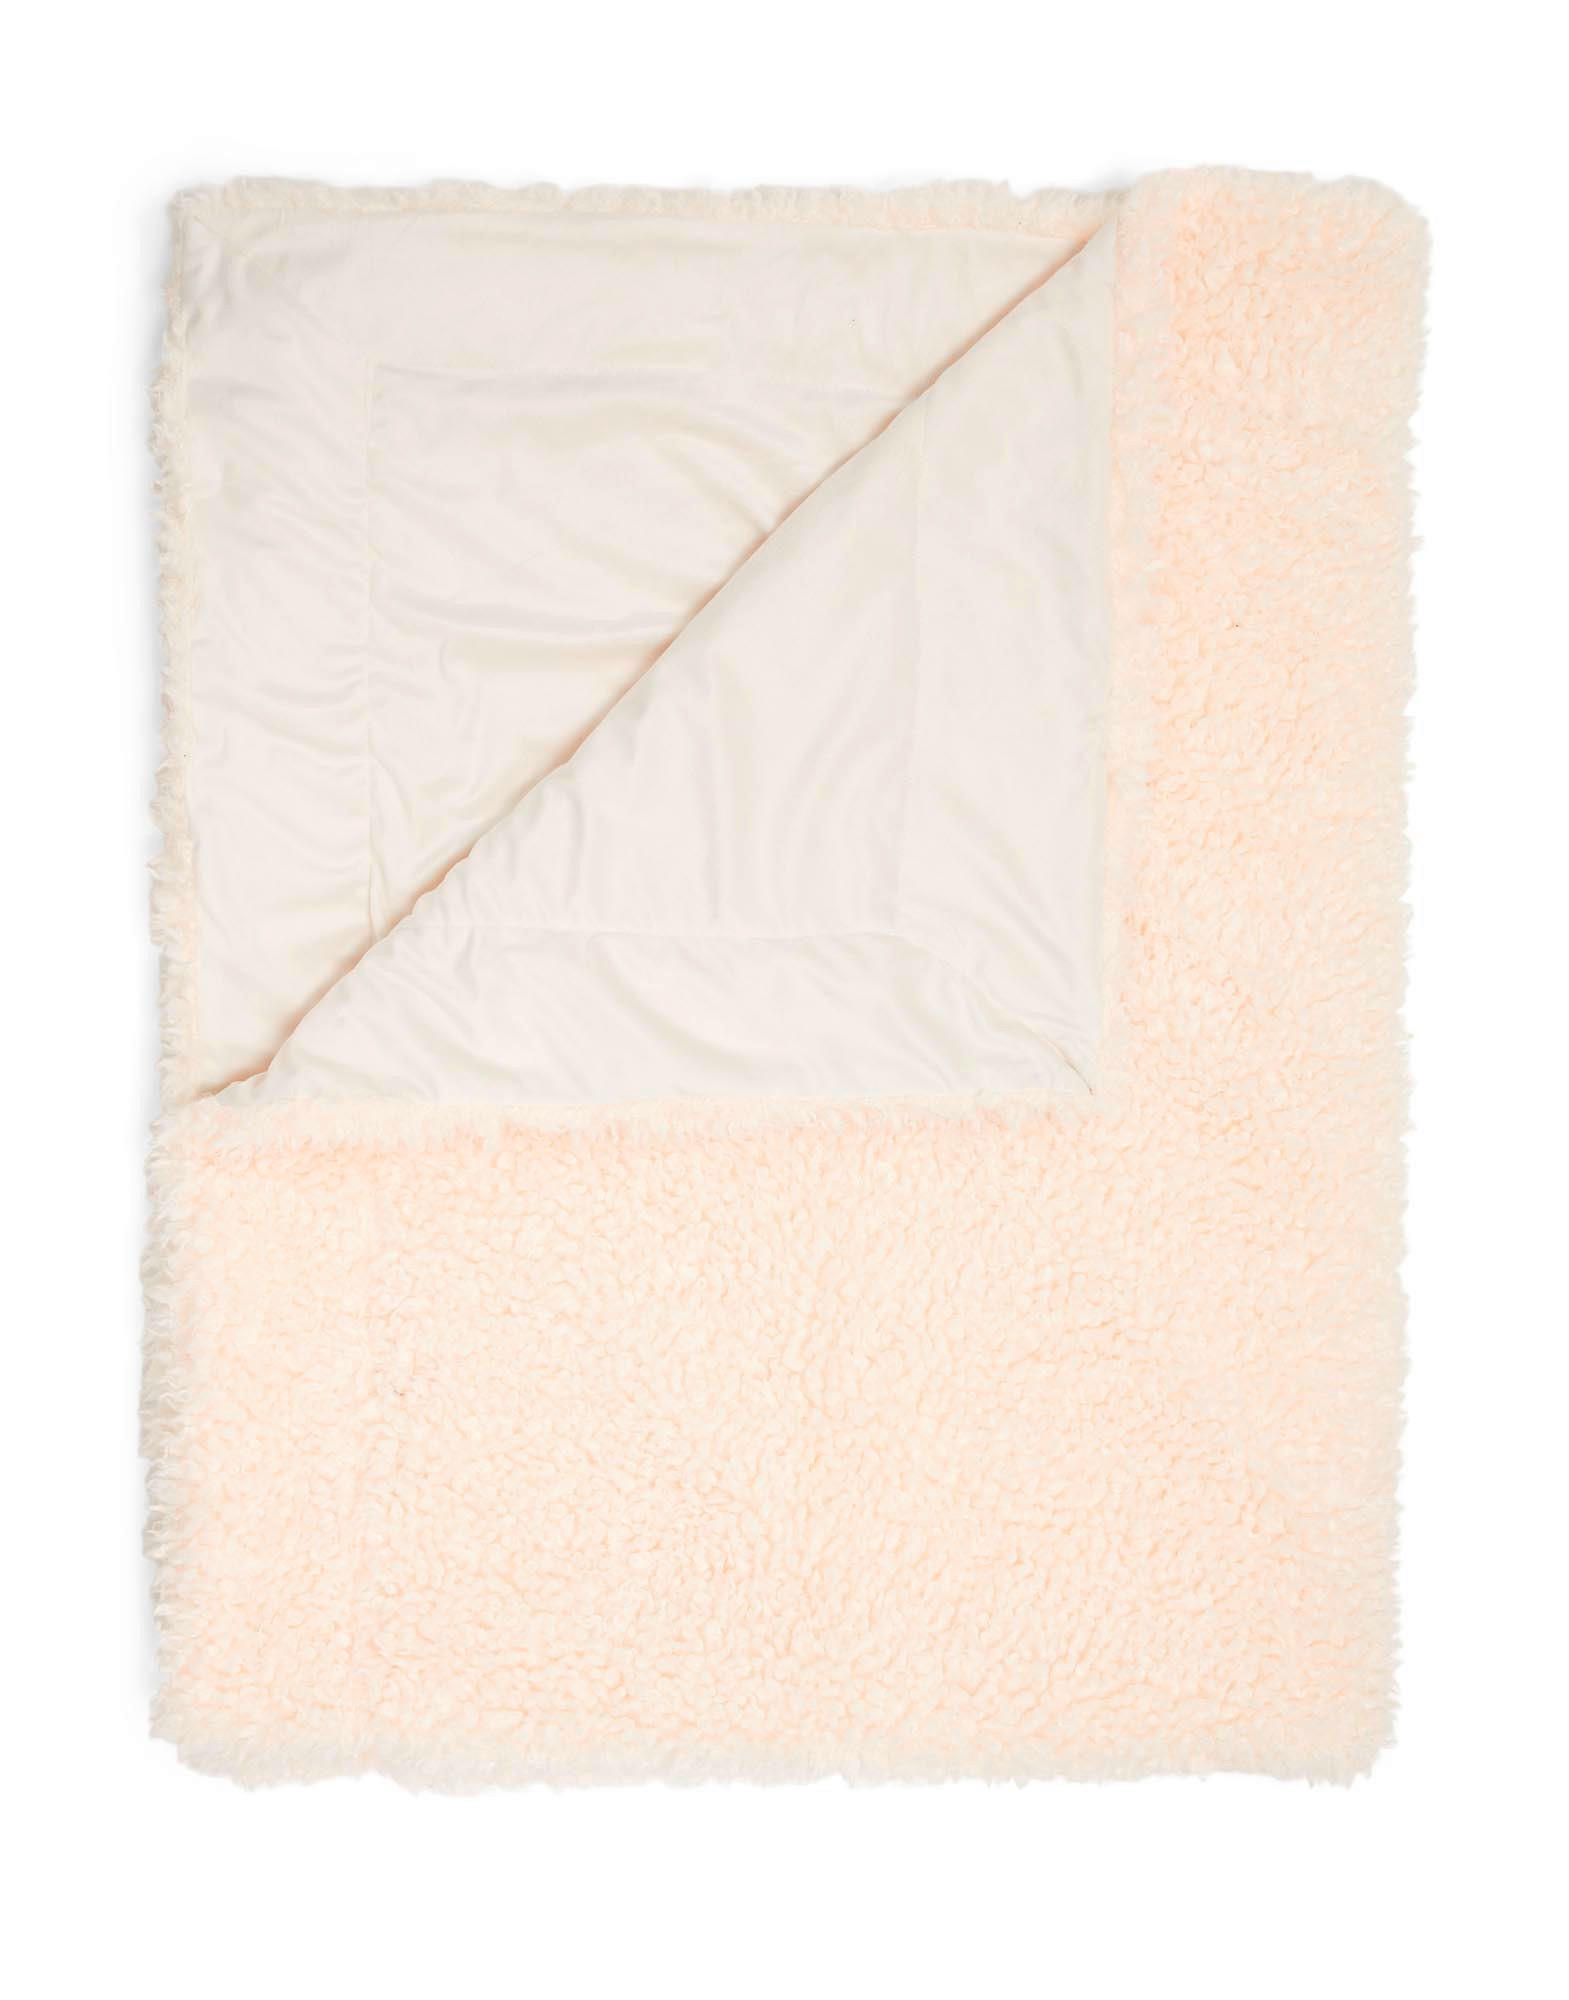 PLAID  - Sandfarben/Creme, KONVENTIONELL, Textil/Fell (150/200cm) - Essenza